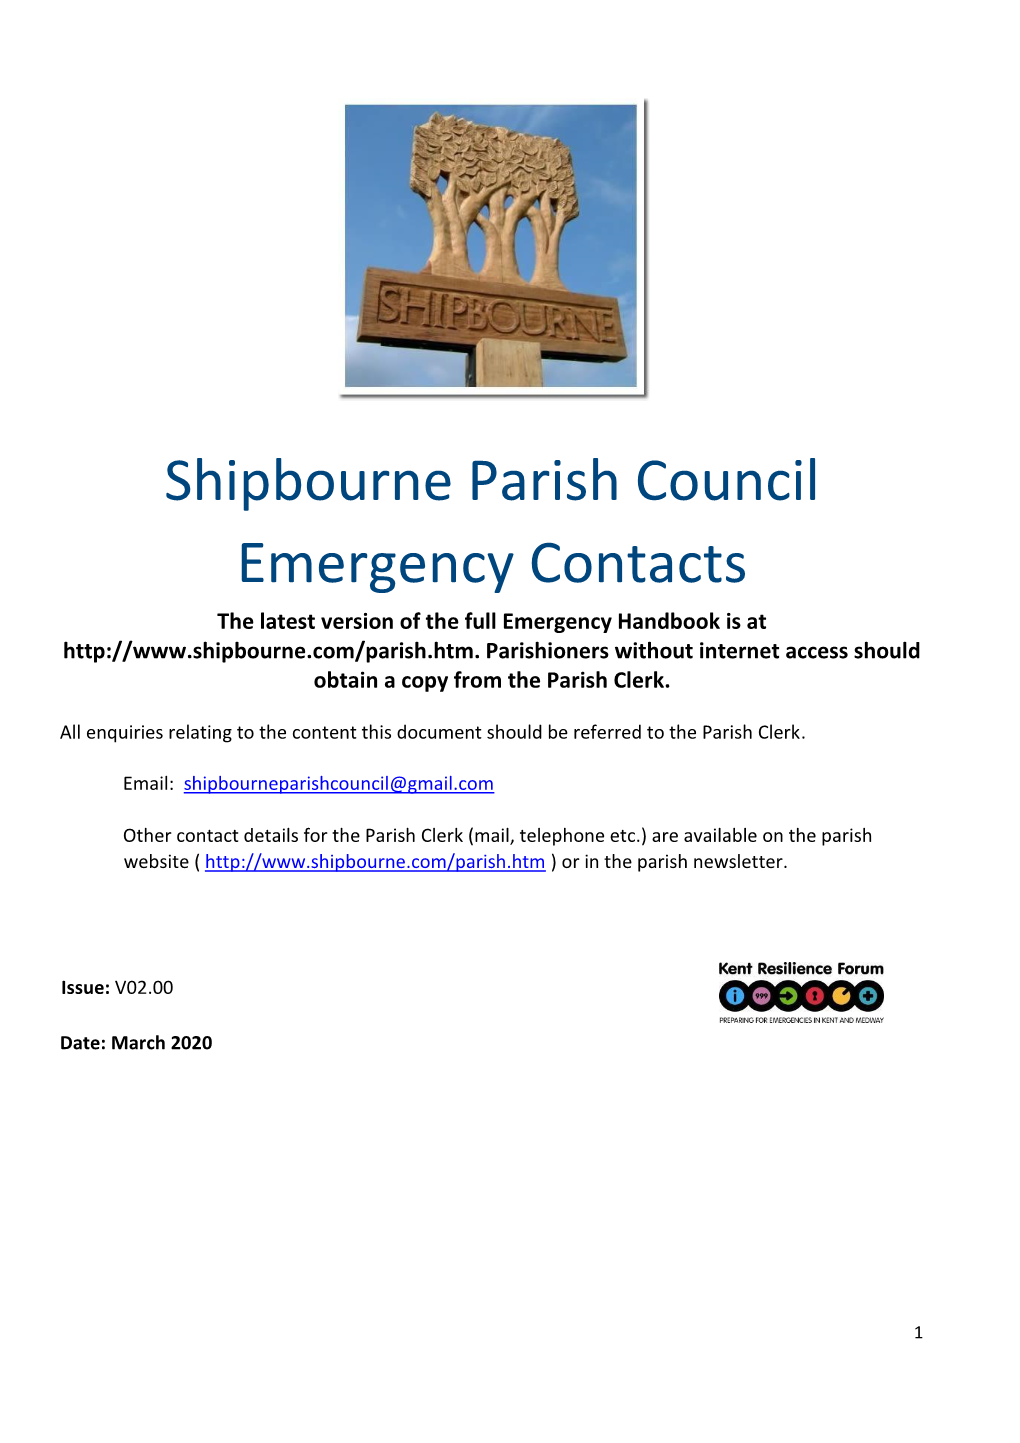 Shipbourne Parish Council Emergency Contacts